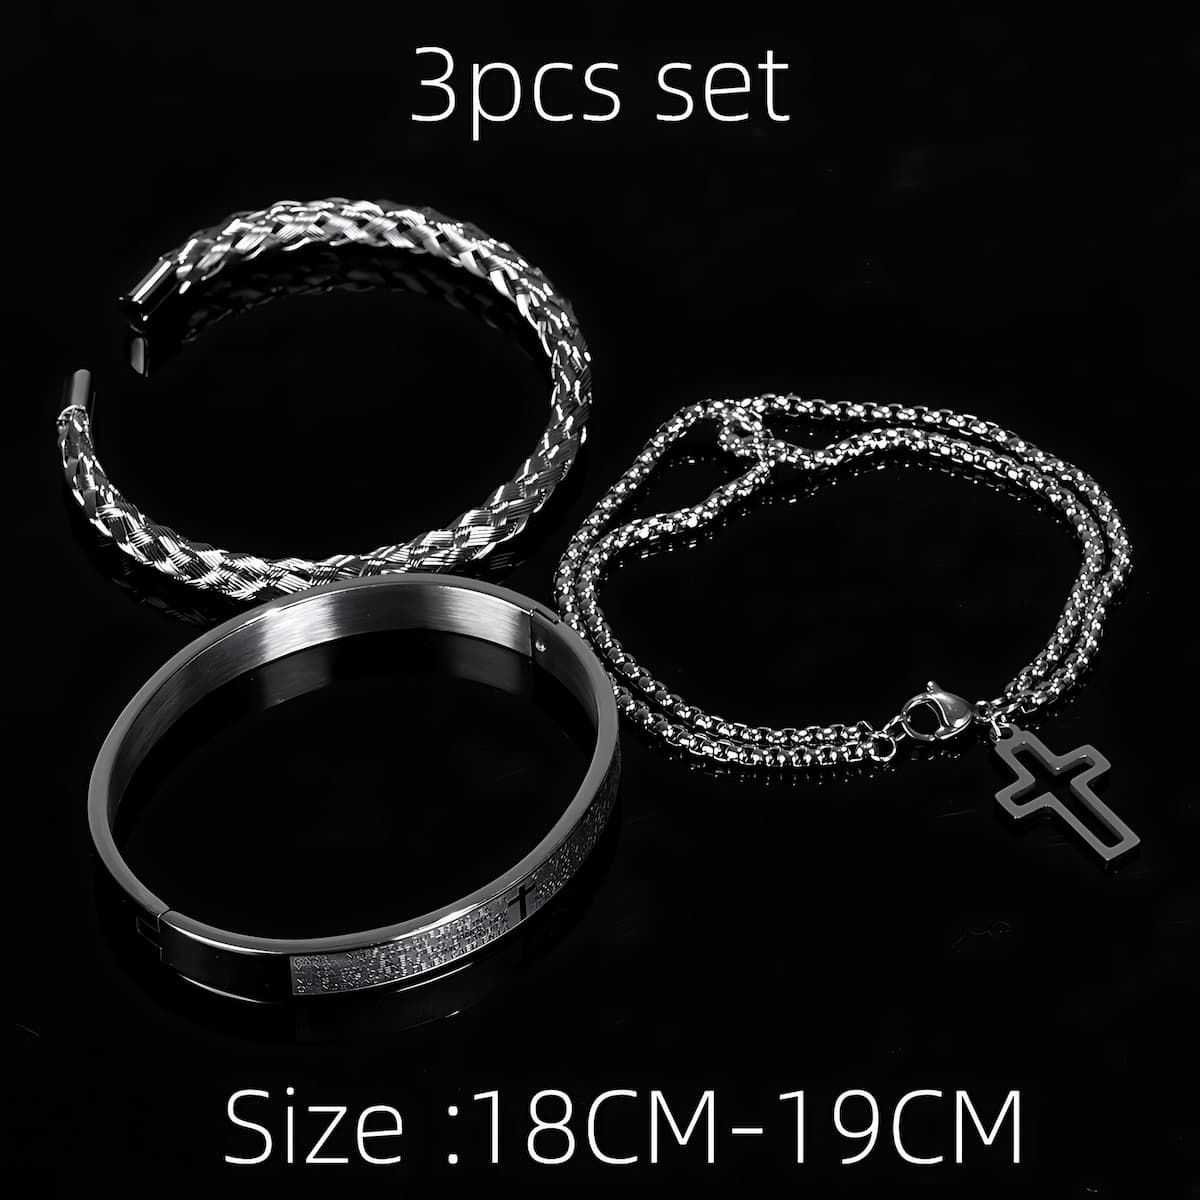 Bible Verse Bracelets for Guys - Xenos Jewelry